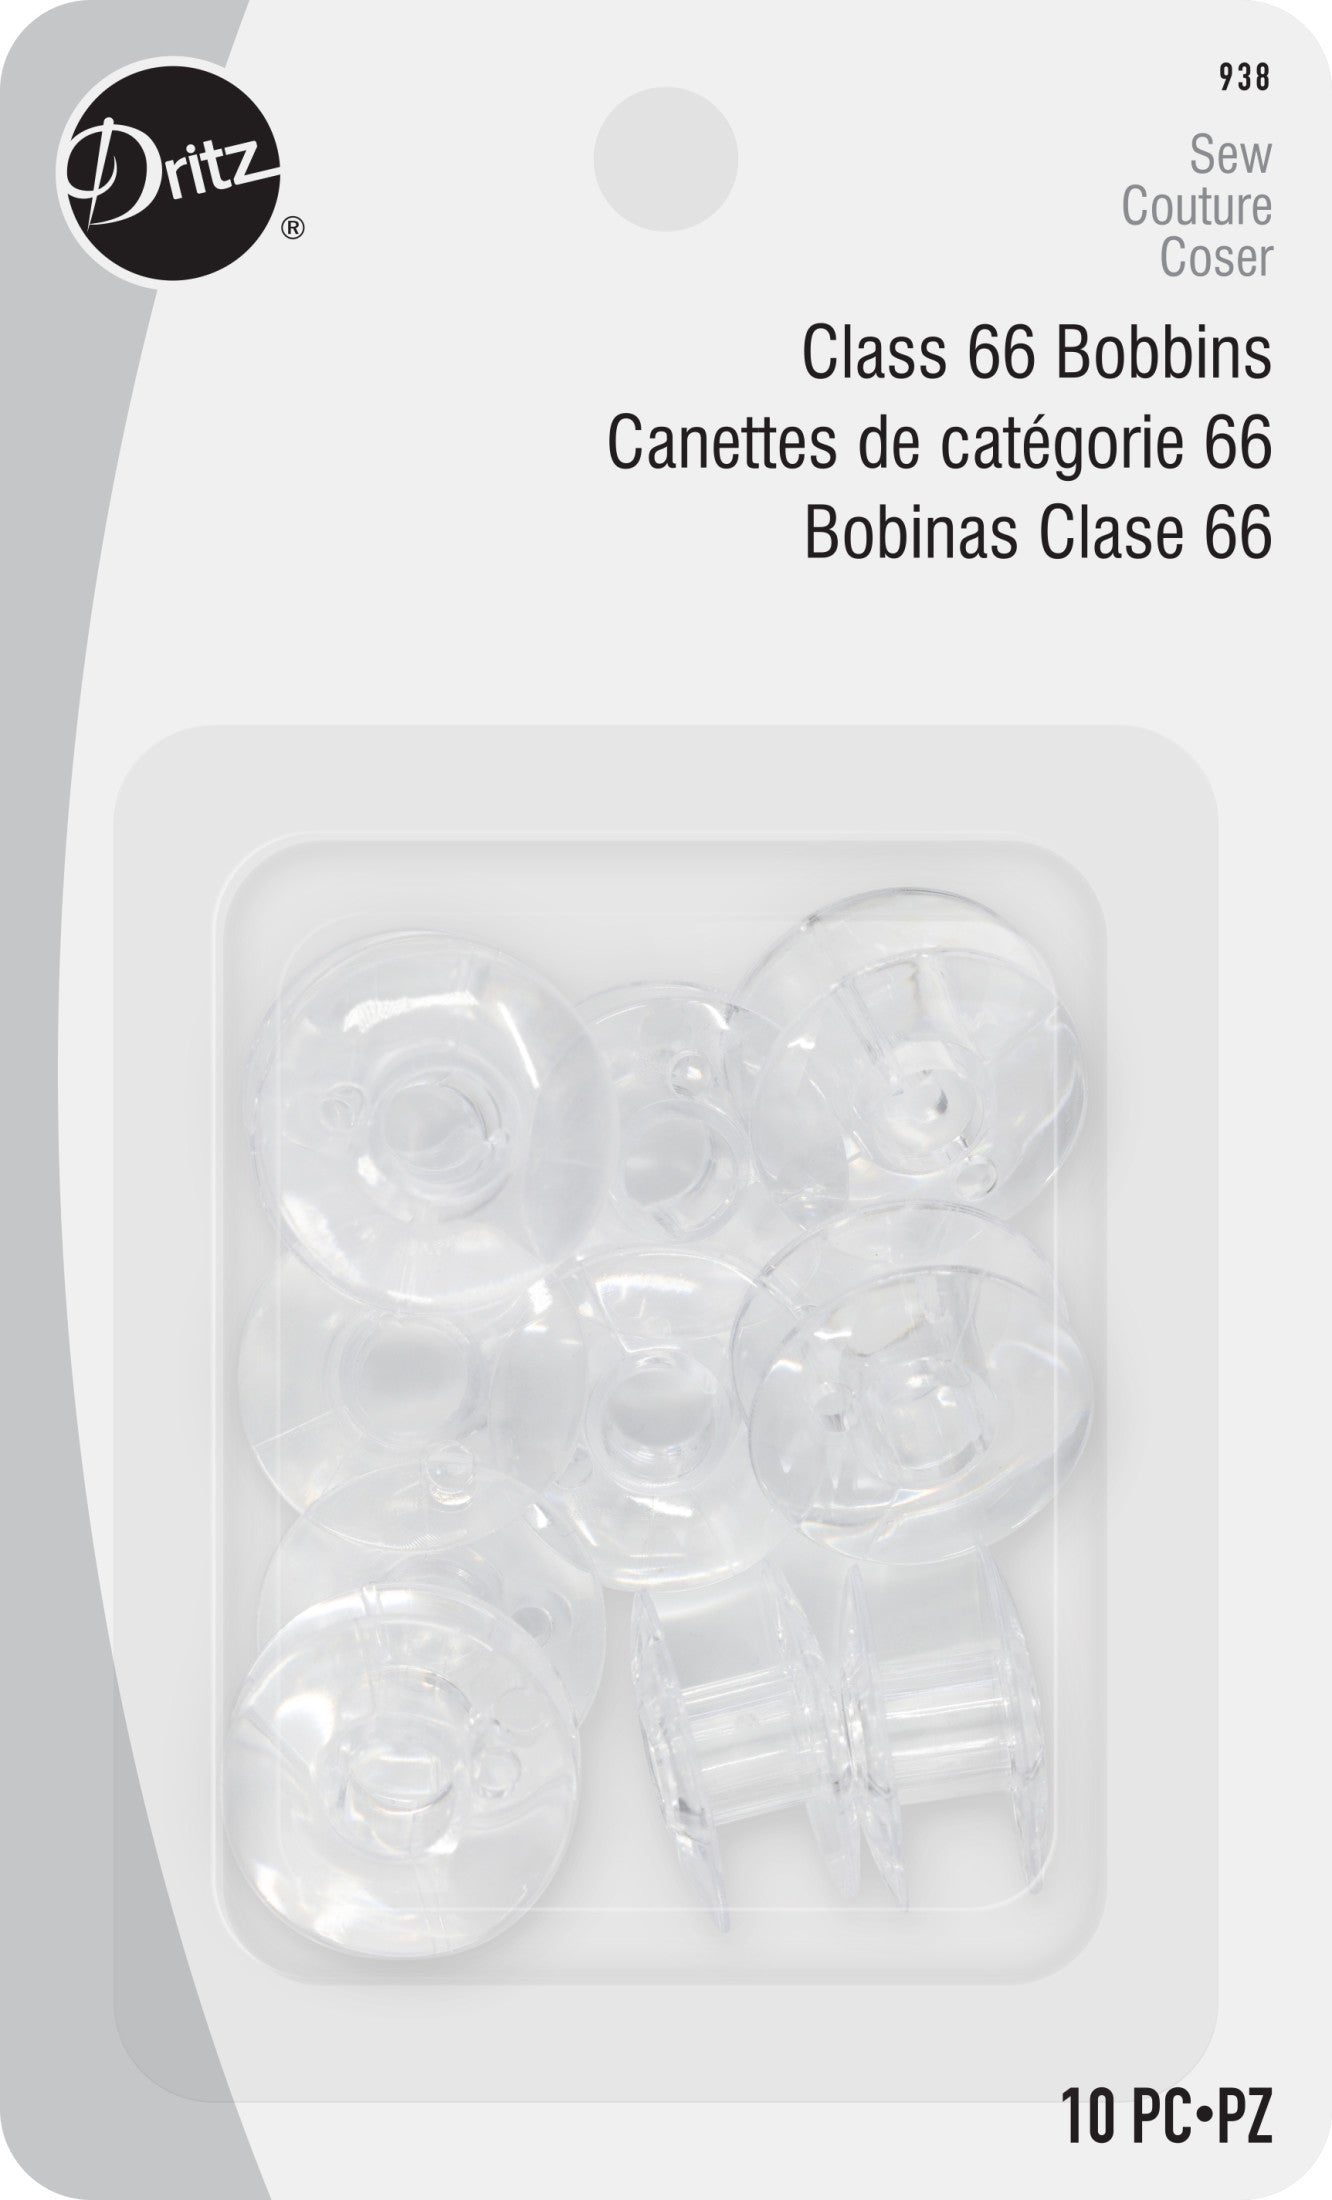 Singer Plastic Class 66 Bobbins - 4 count